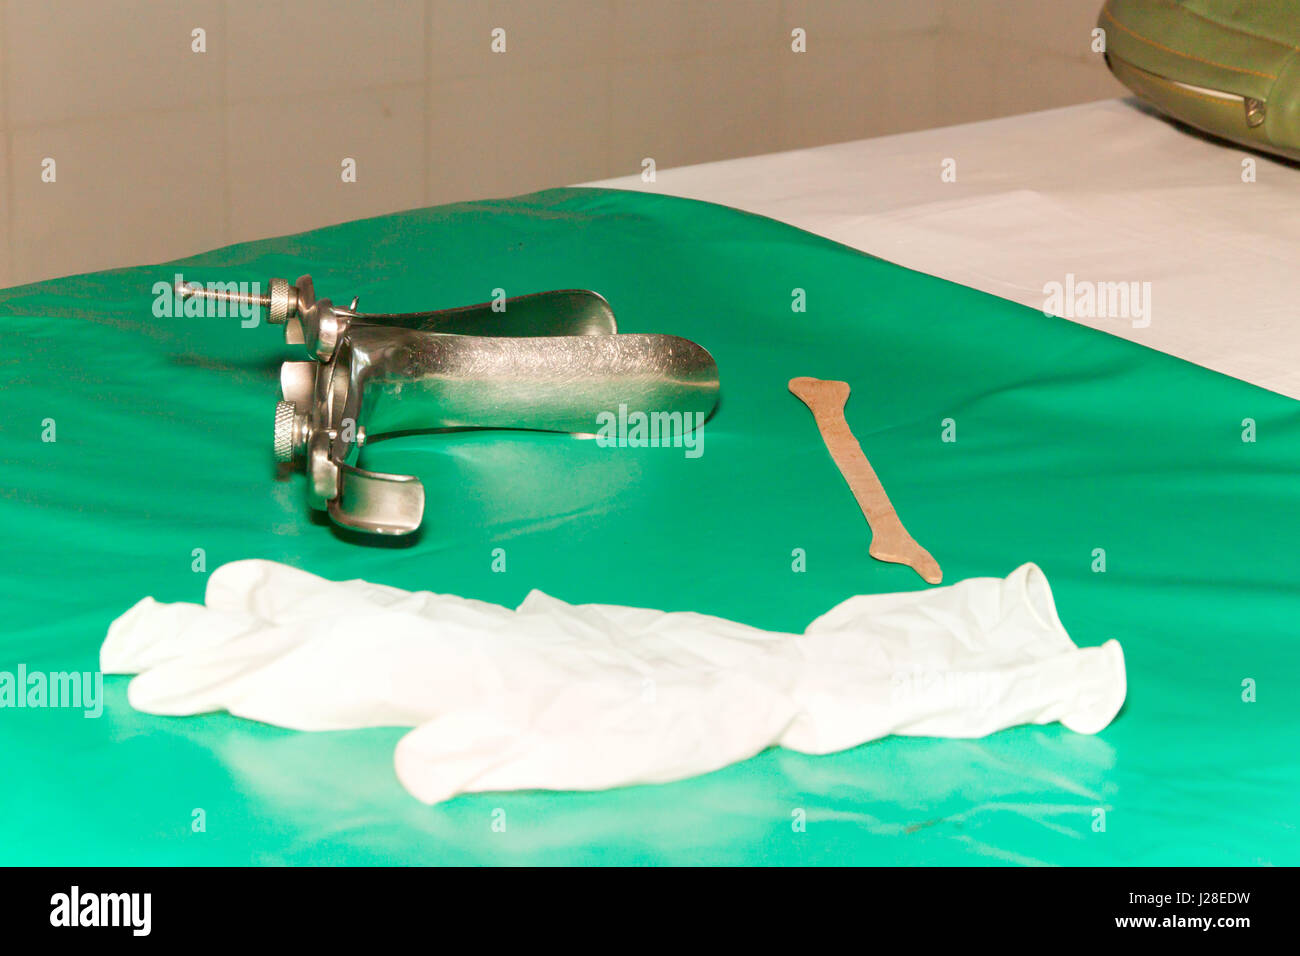 Colposcop, spatola e guanti medici su una pulita coperta di verde (attrezzature speculum vaginale) per (Pap test) ginecologia ispezionare esame ca cervicale Foto Stock